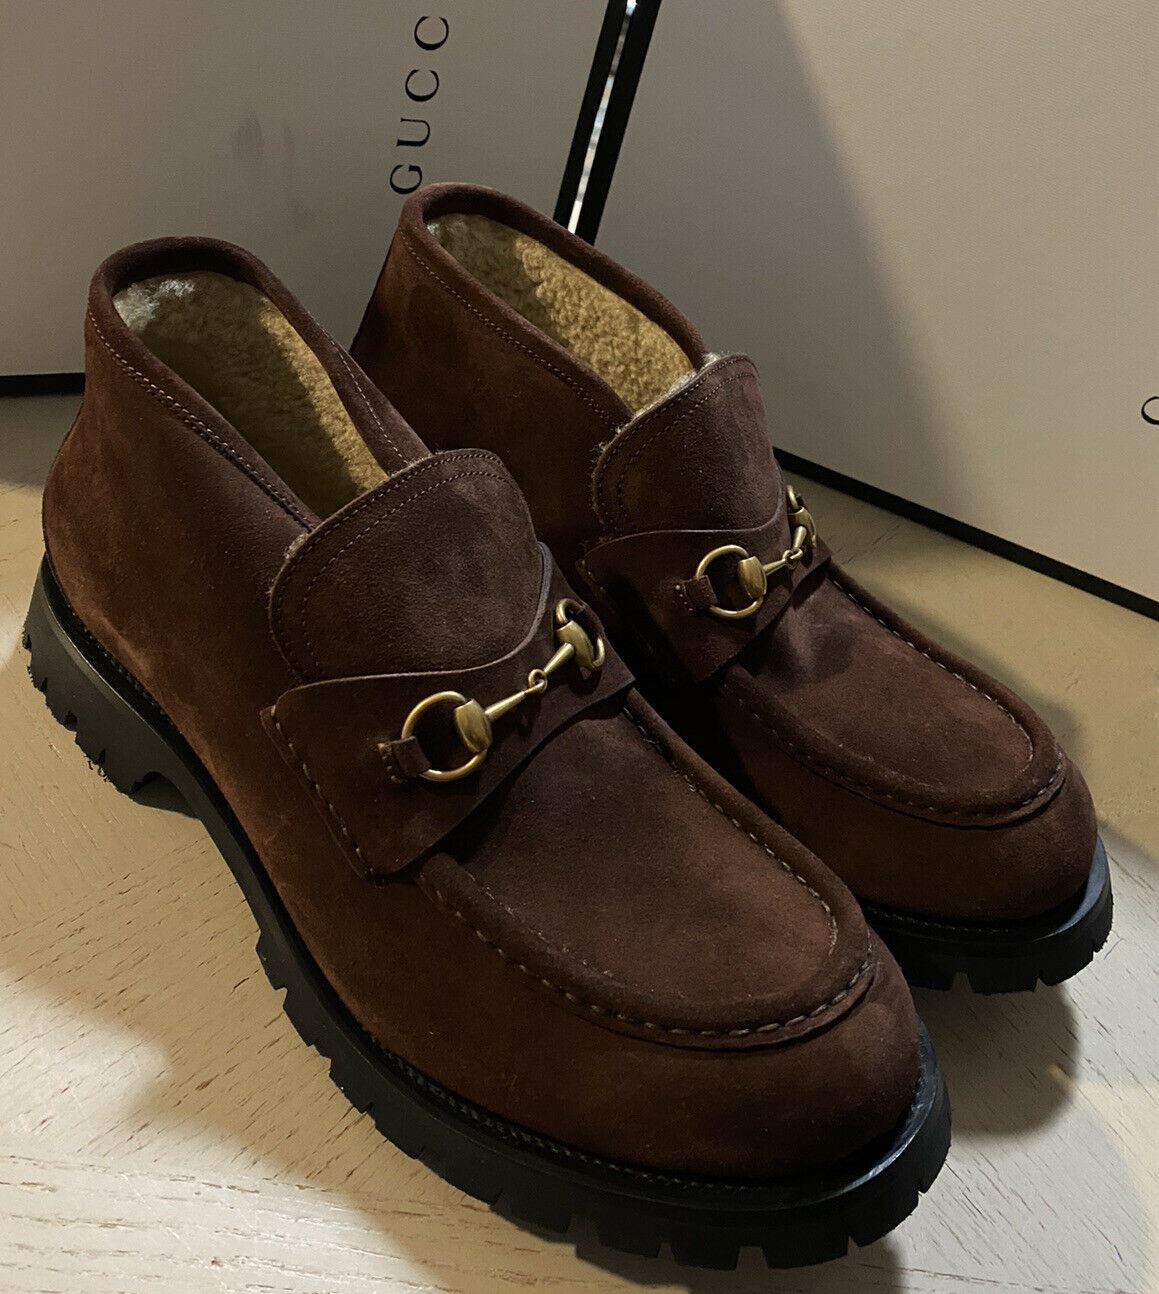 NIB $1400 Gucci Men’s Suede Ankle Boots Shoes DK Brown 7.5 US / 6.5 UK 575126